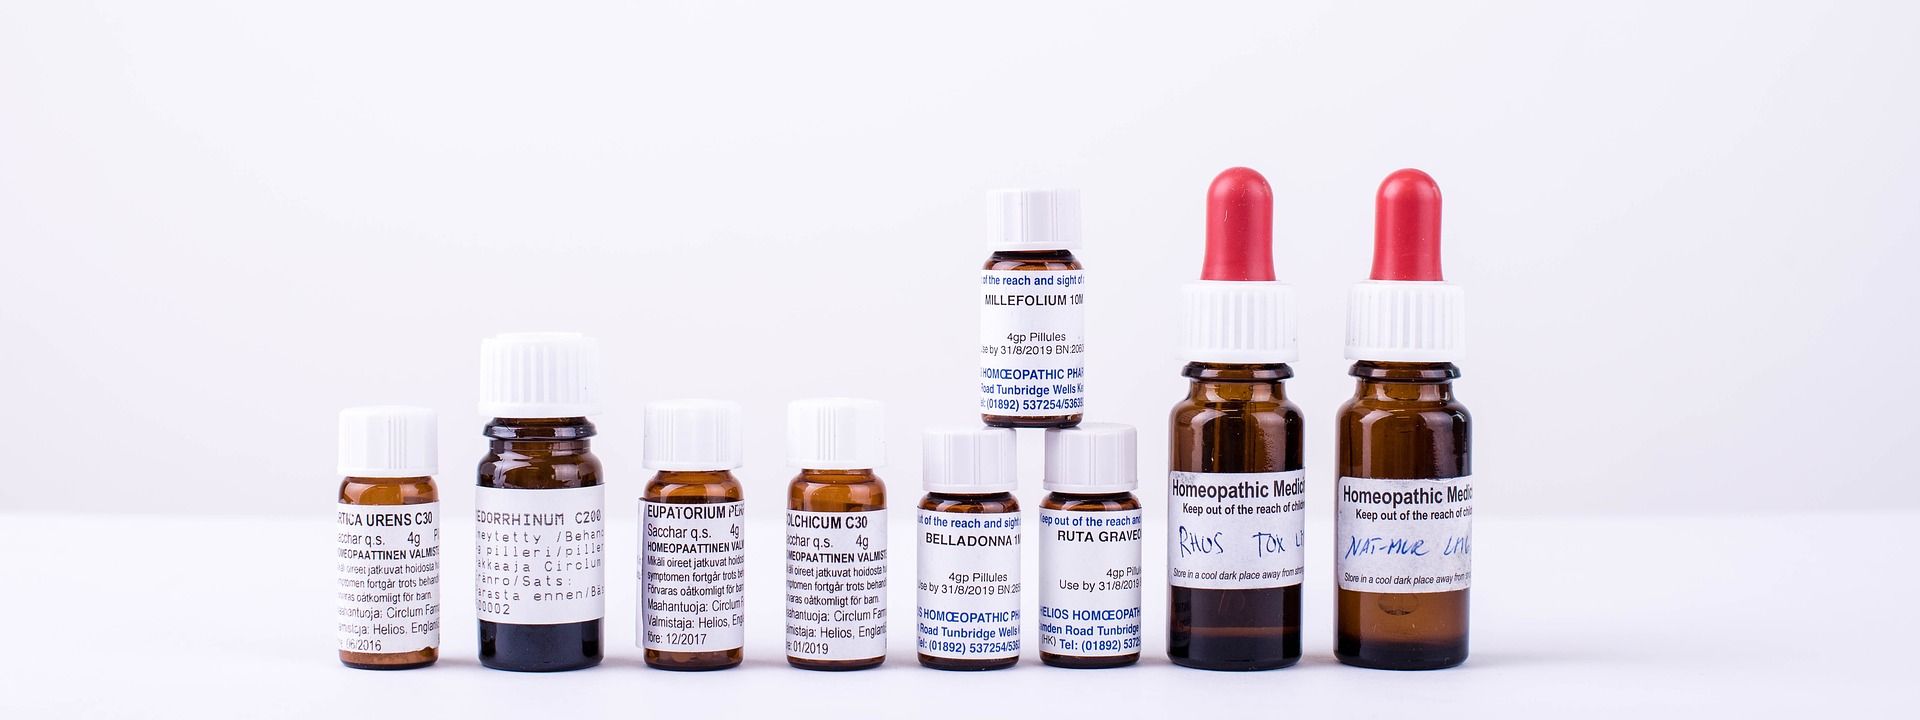 Productos de homeopatía. 